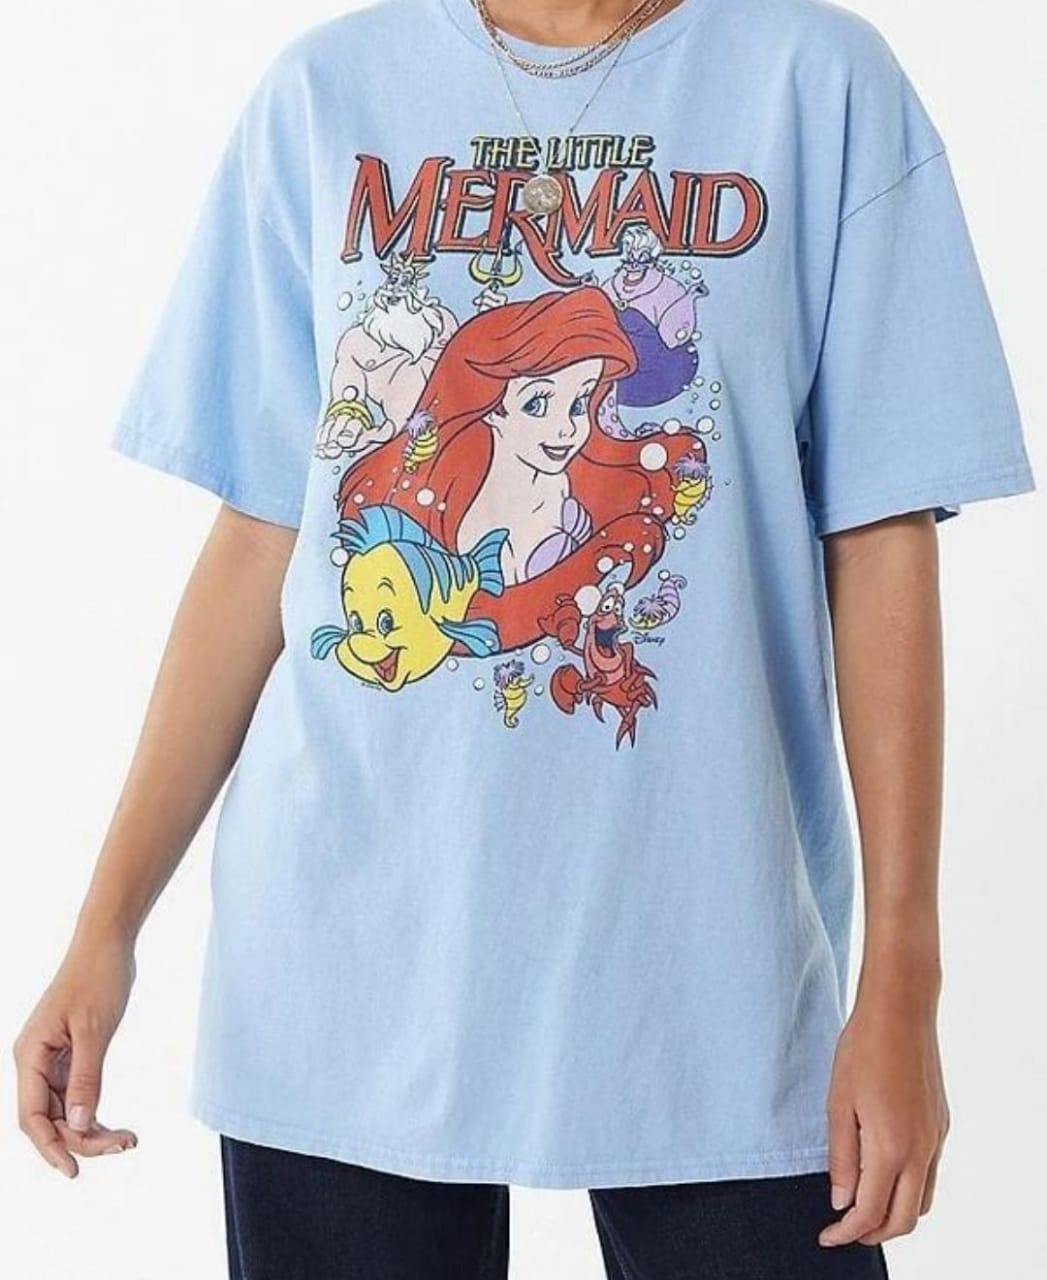 The little mermaid women's oversized tshirt